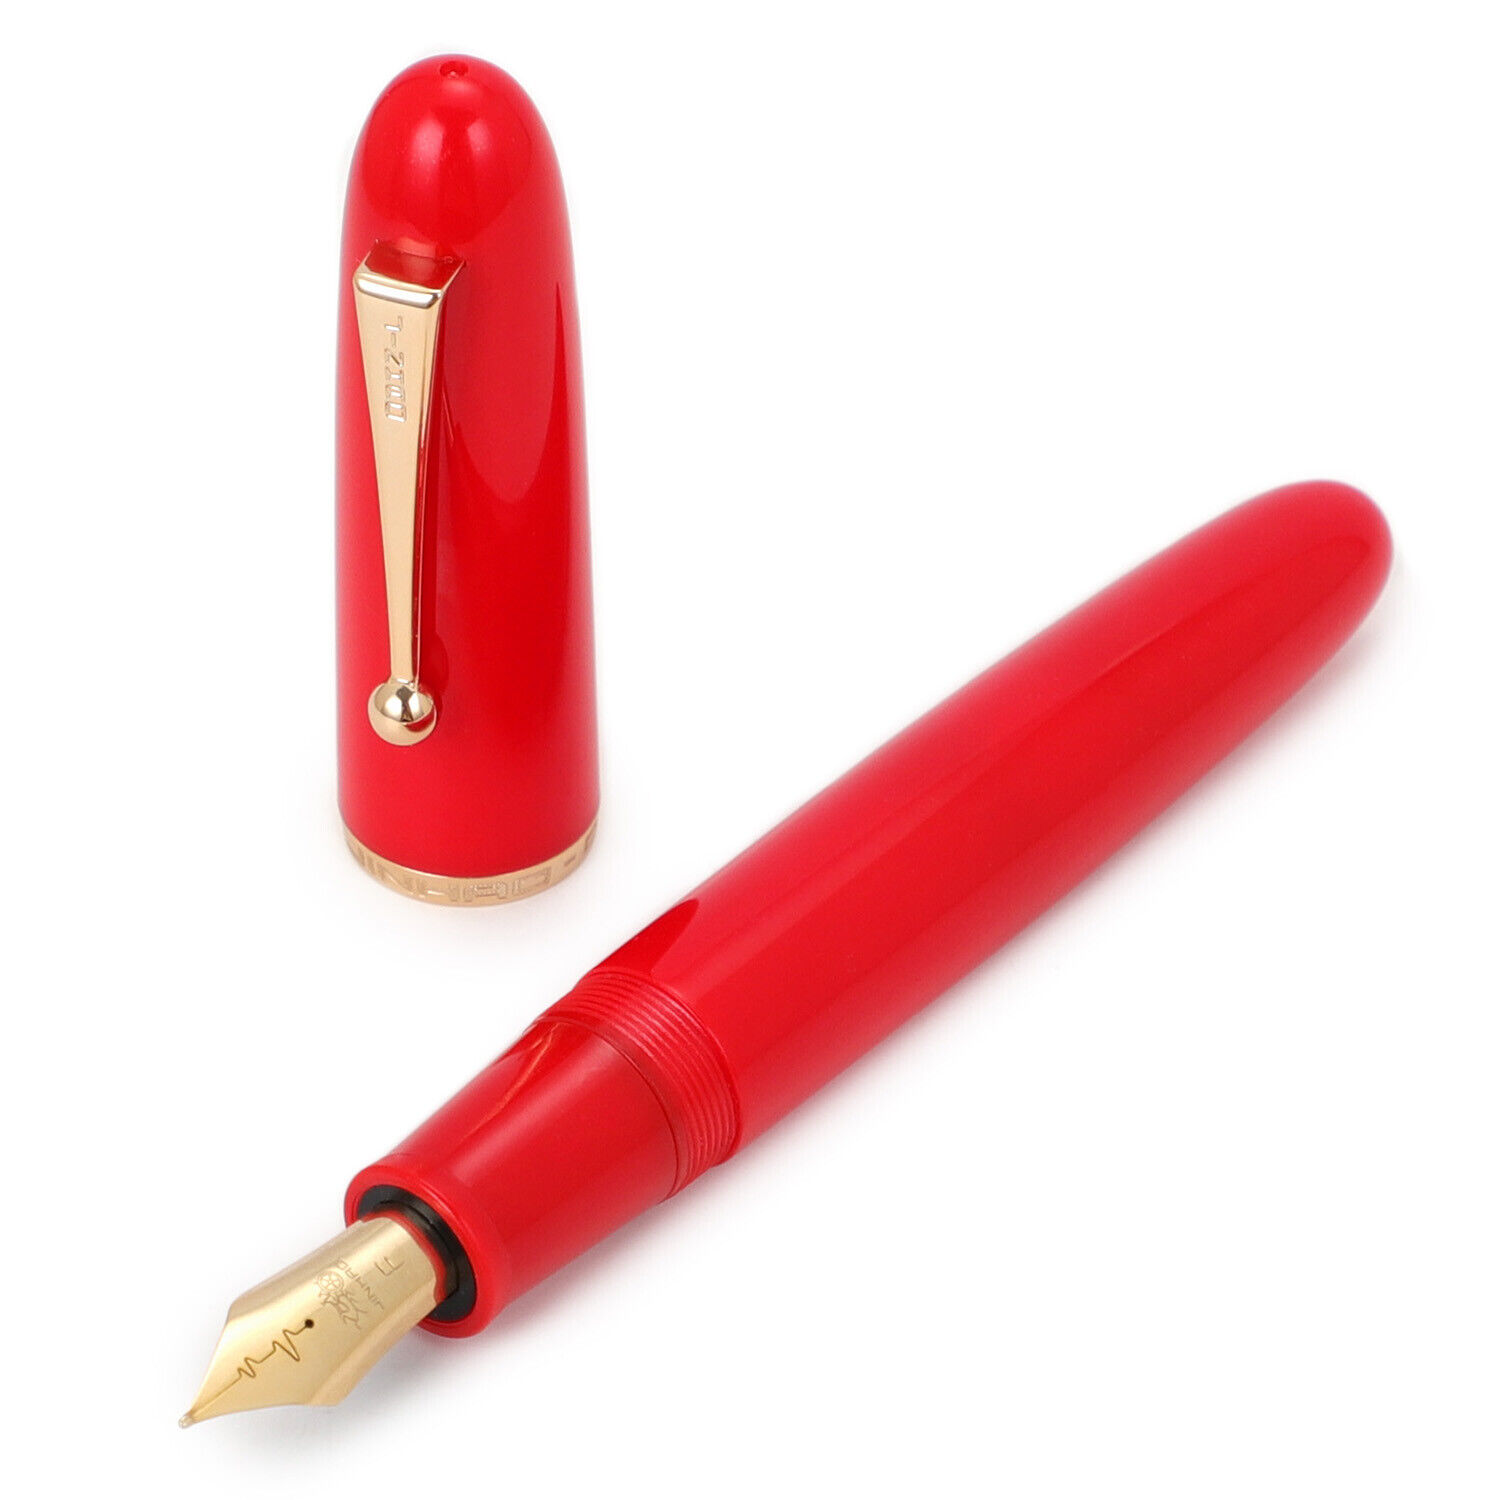 Jinhao 9019 Fountain Pen #8 F/M Heartbeat Nib, Vivid Red Resin & Large Converter